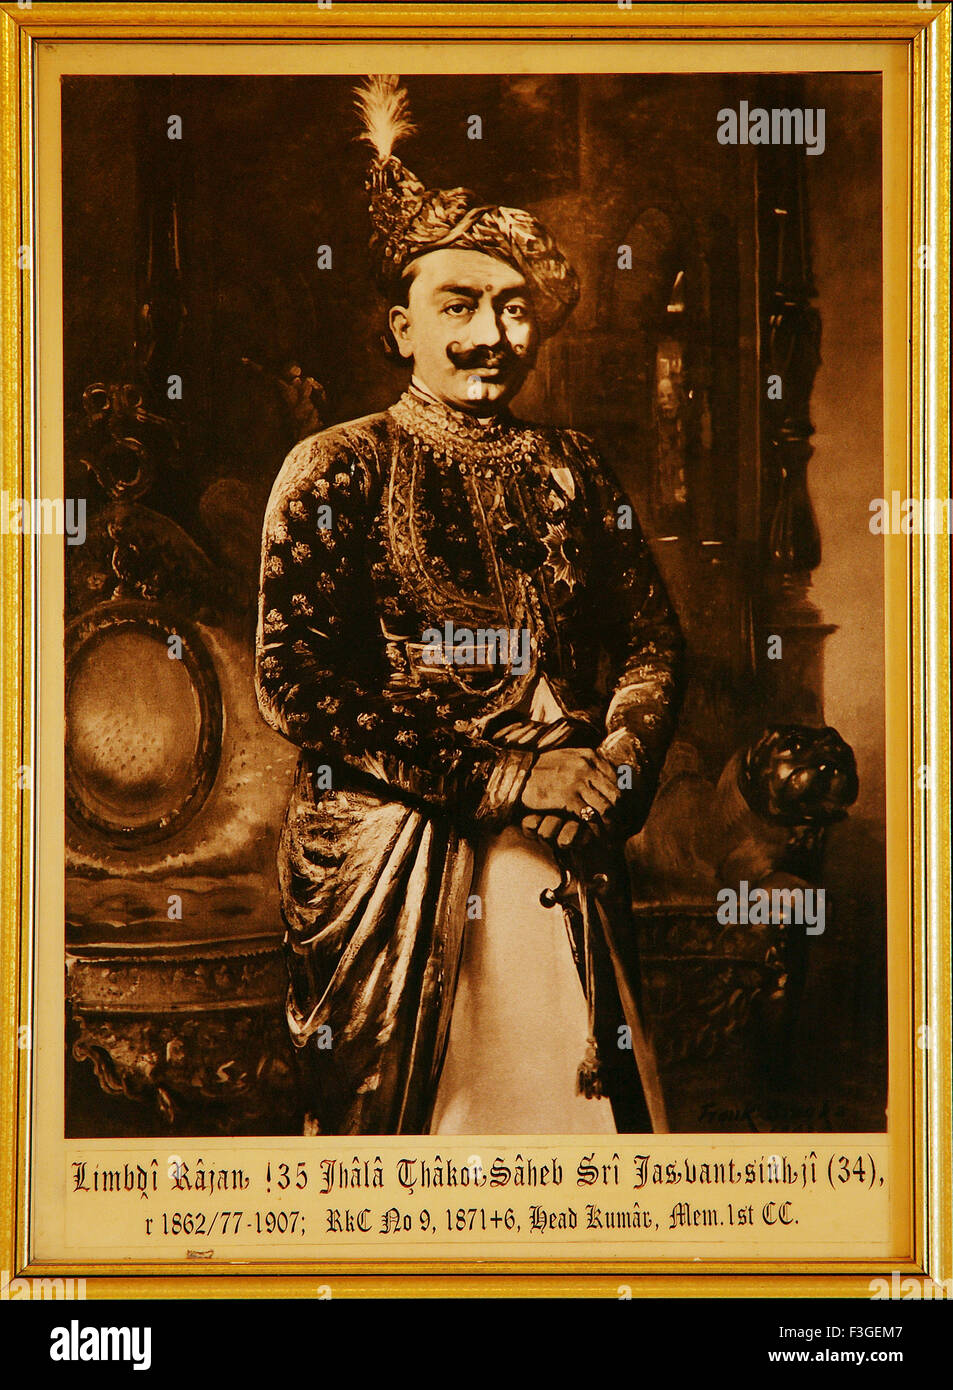 La pittura e la old royal ritratto Limboi Rajan 35 Thakur Saheb Sri Jasvant Singh Ji 34 1862/77 1907 ; Gujarat ; India n. MR Foto Stock